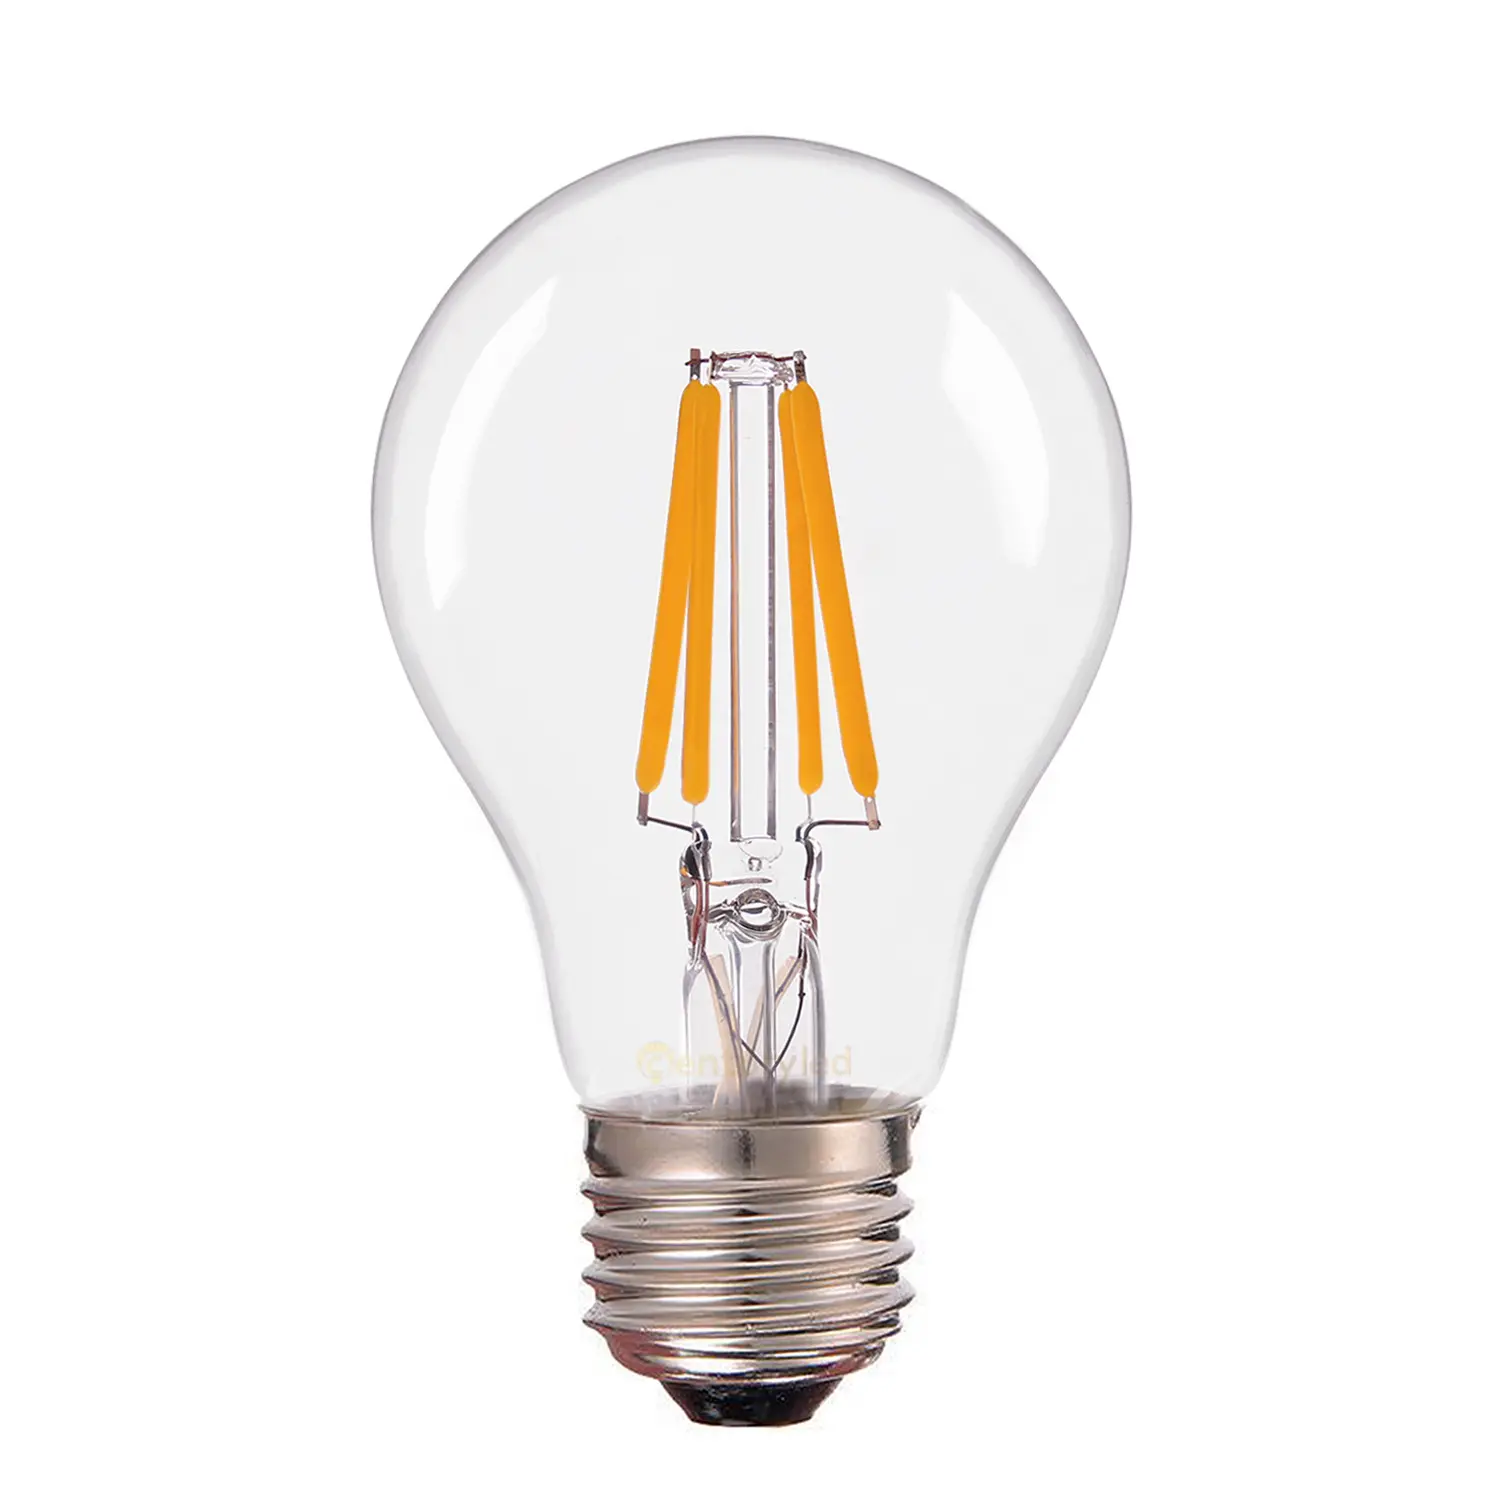 LED filament led bulb dimmable a19 led light bulbs e27 led yellow patio dimmable daylight bulbs